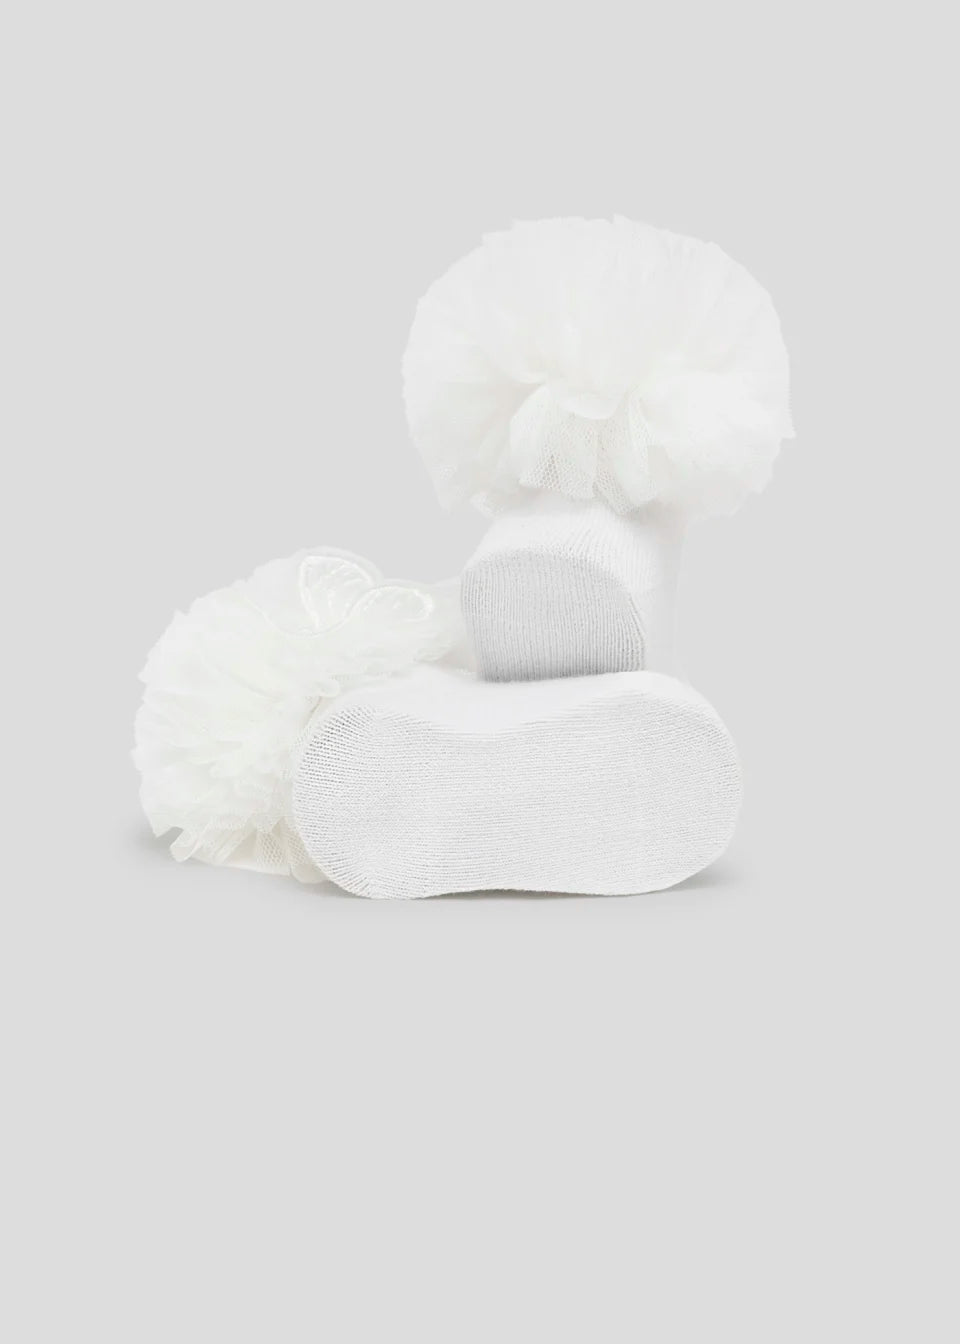 Organic cotton white bow socks and headband for baby girl.